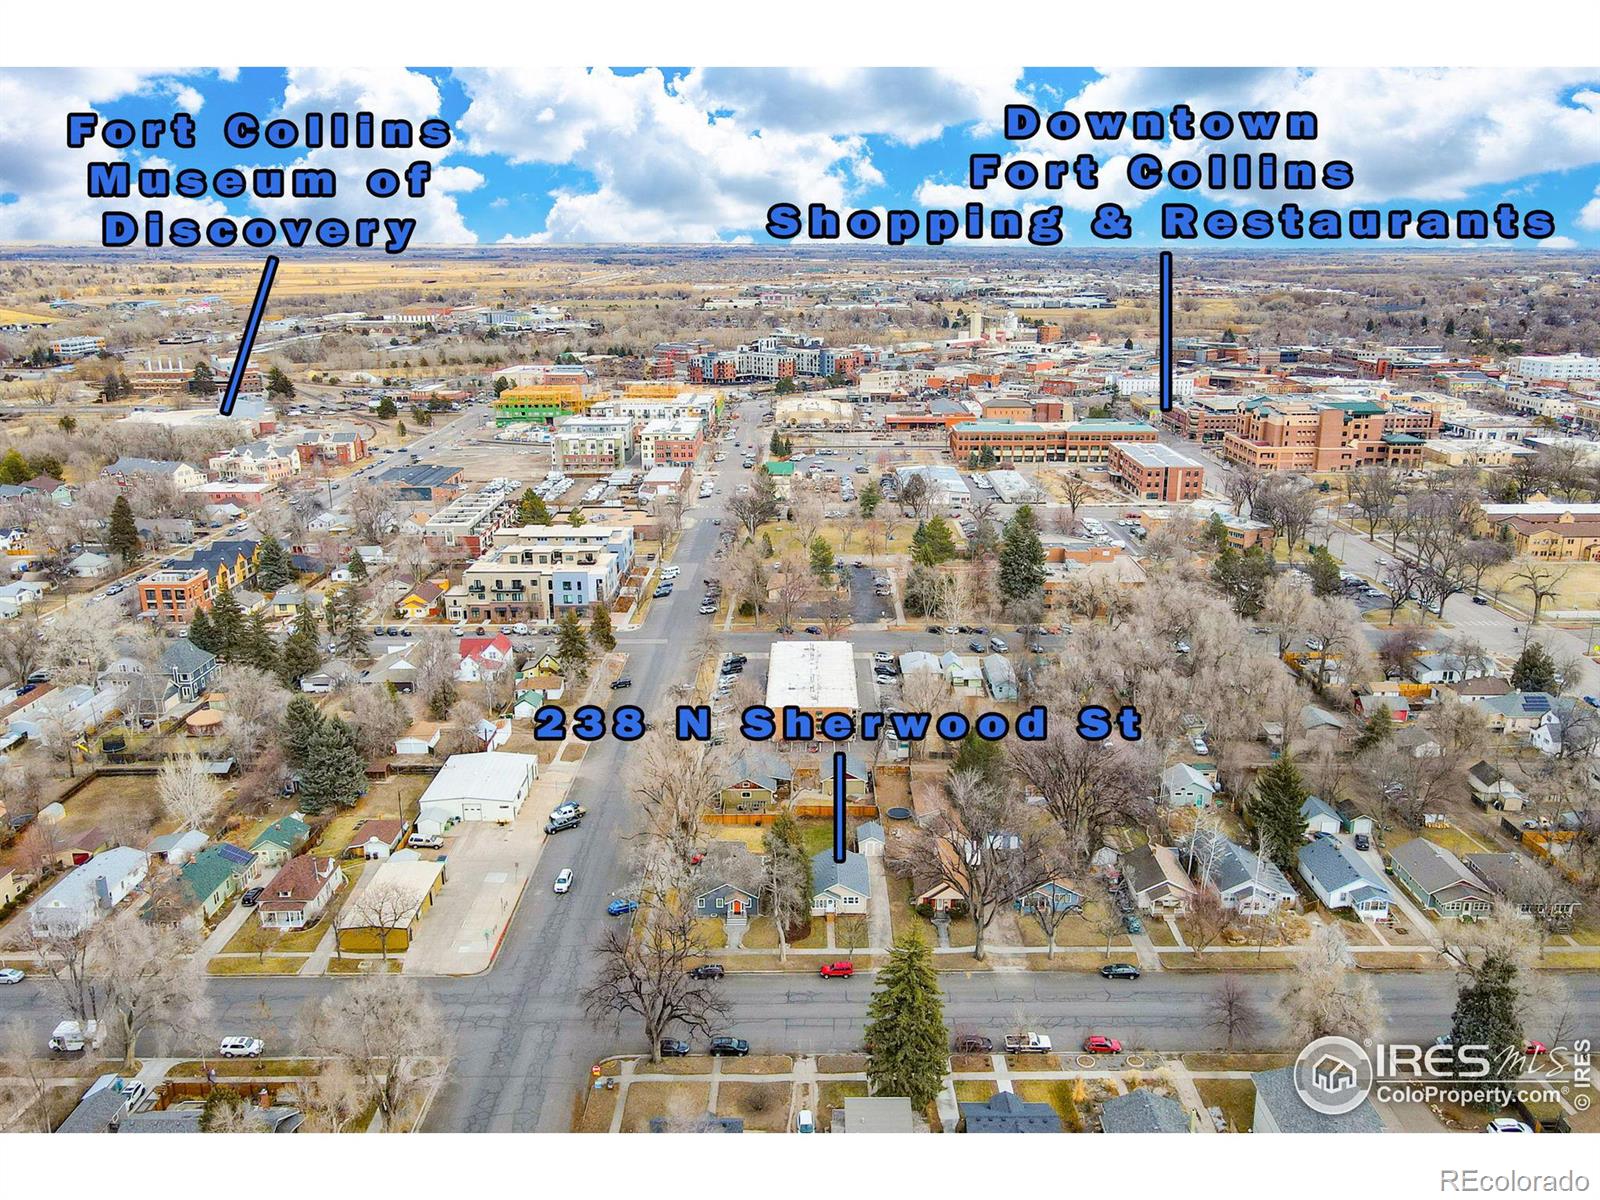 MLS Image #28 for 238 n sherwood street,fort collins, Colorado